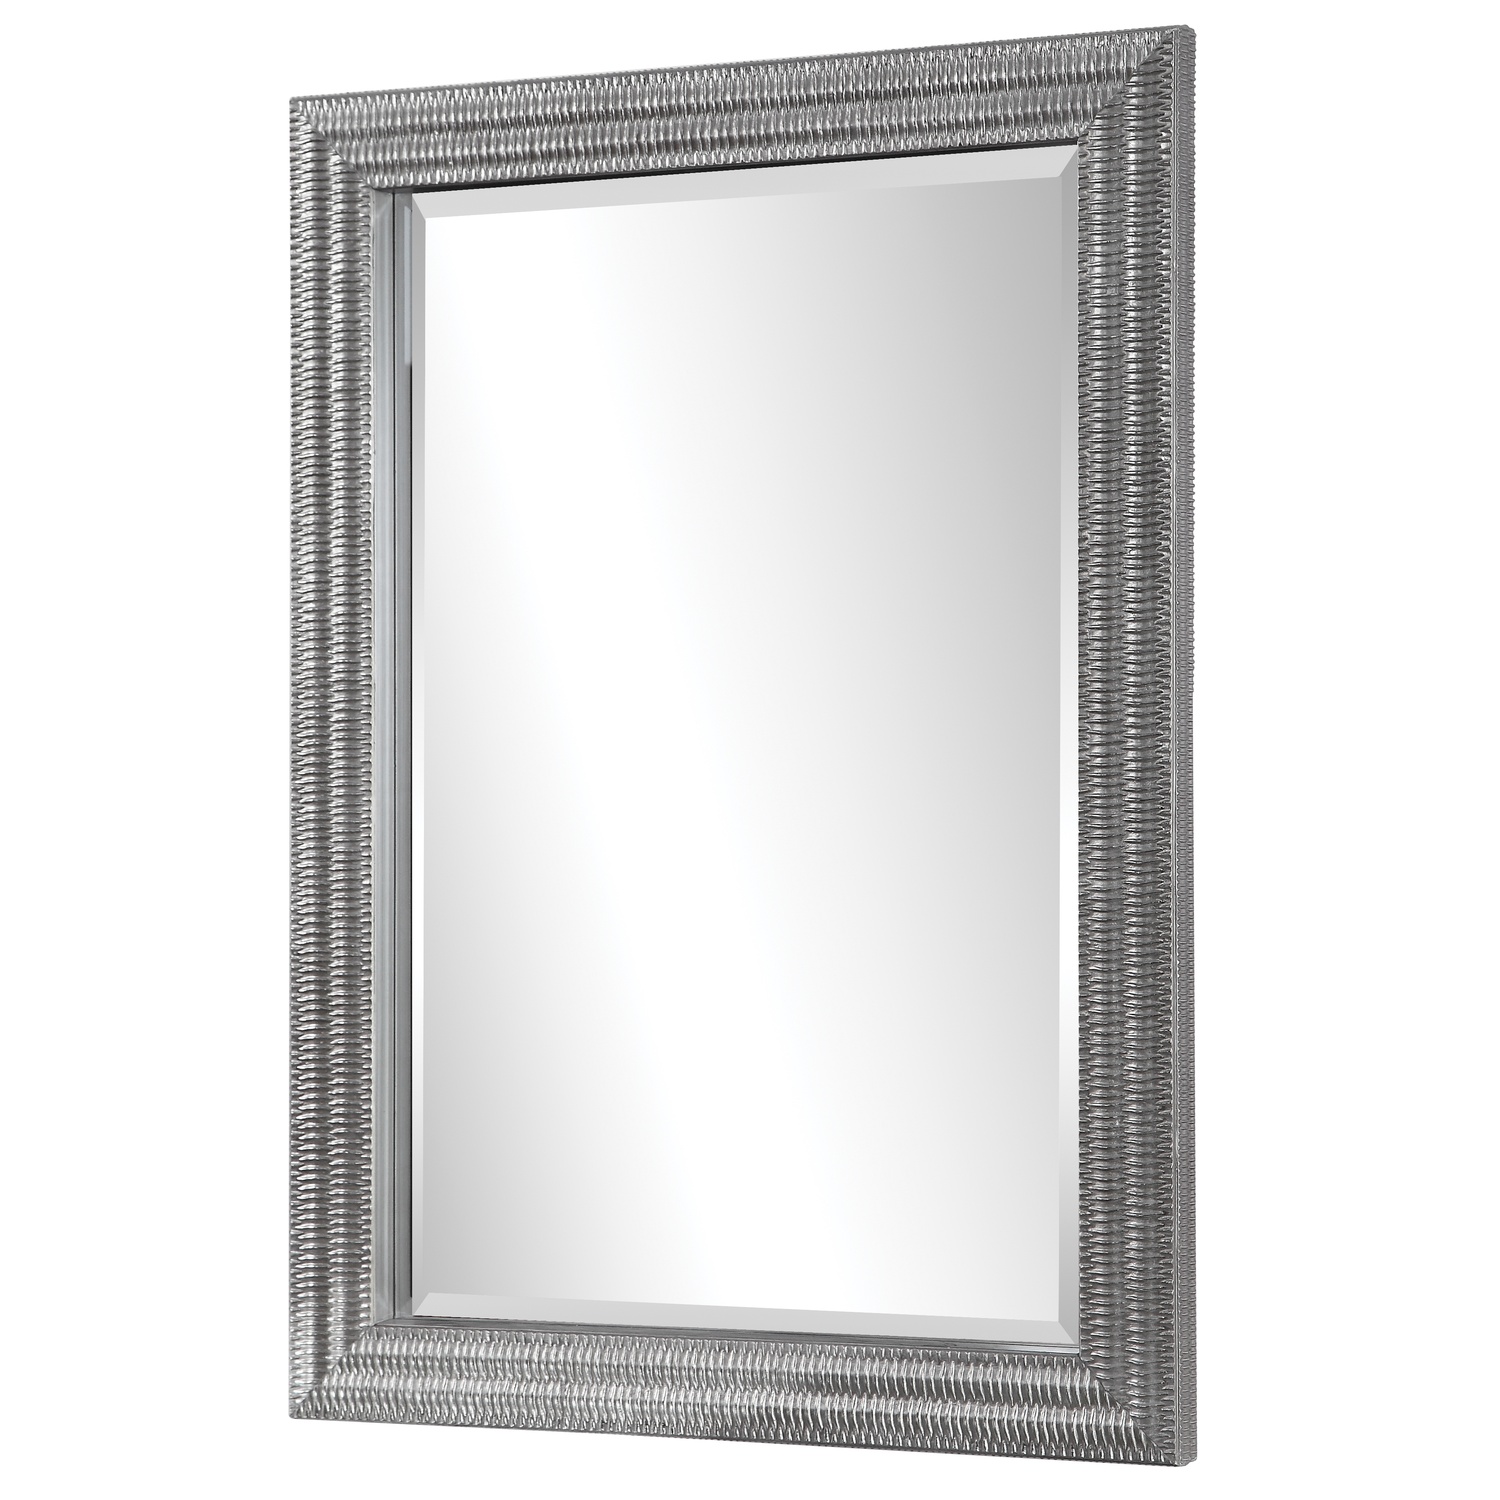 Alwin-Silver Mirror